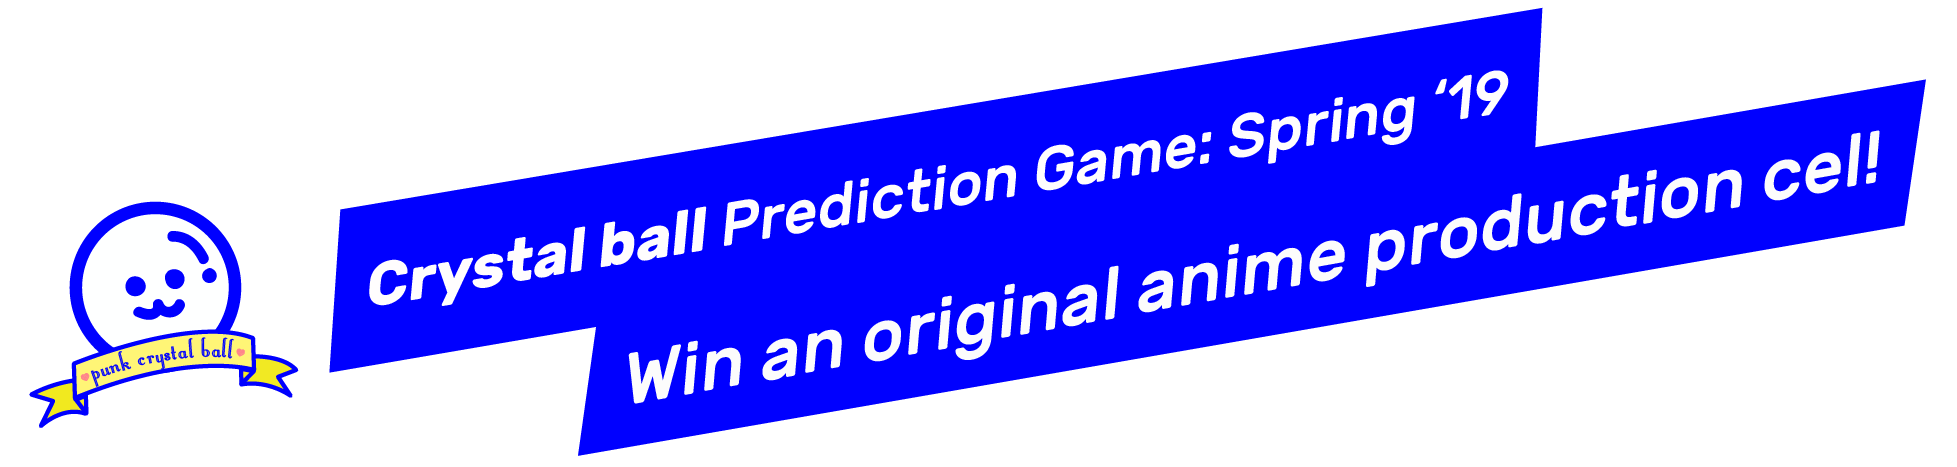 Crystal Ball Prediction Game: Spring '19. Win an original anime production cel!